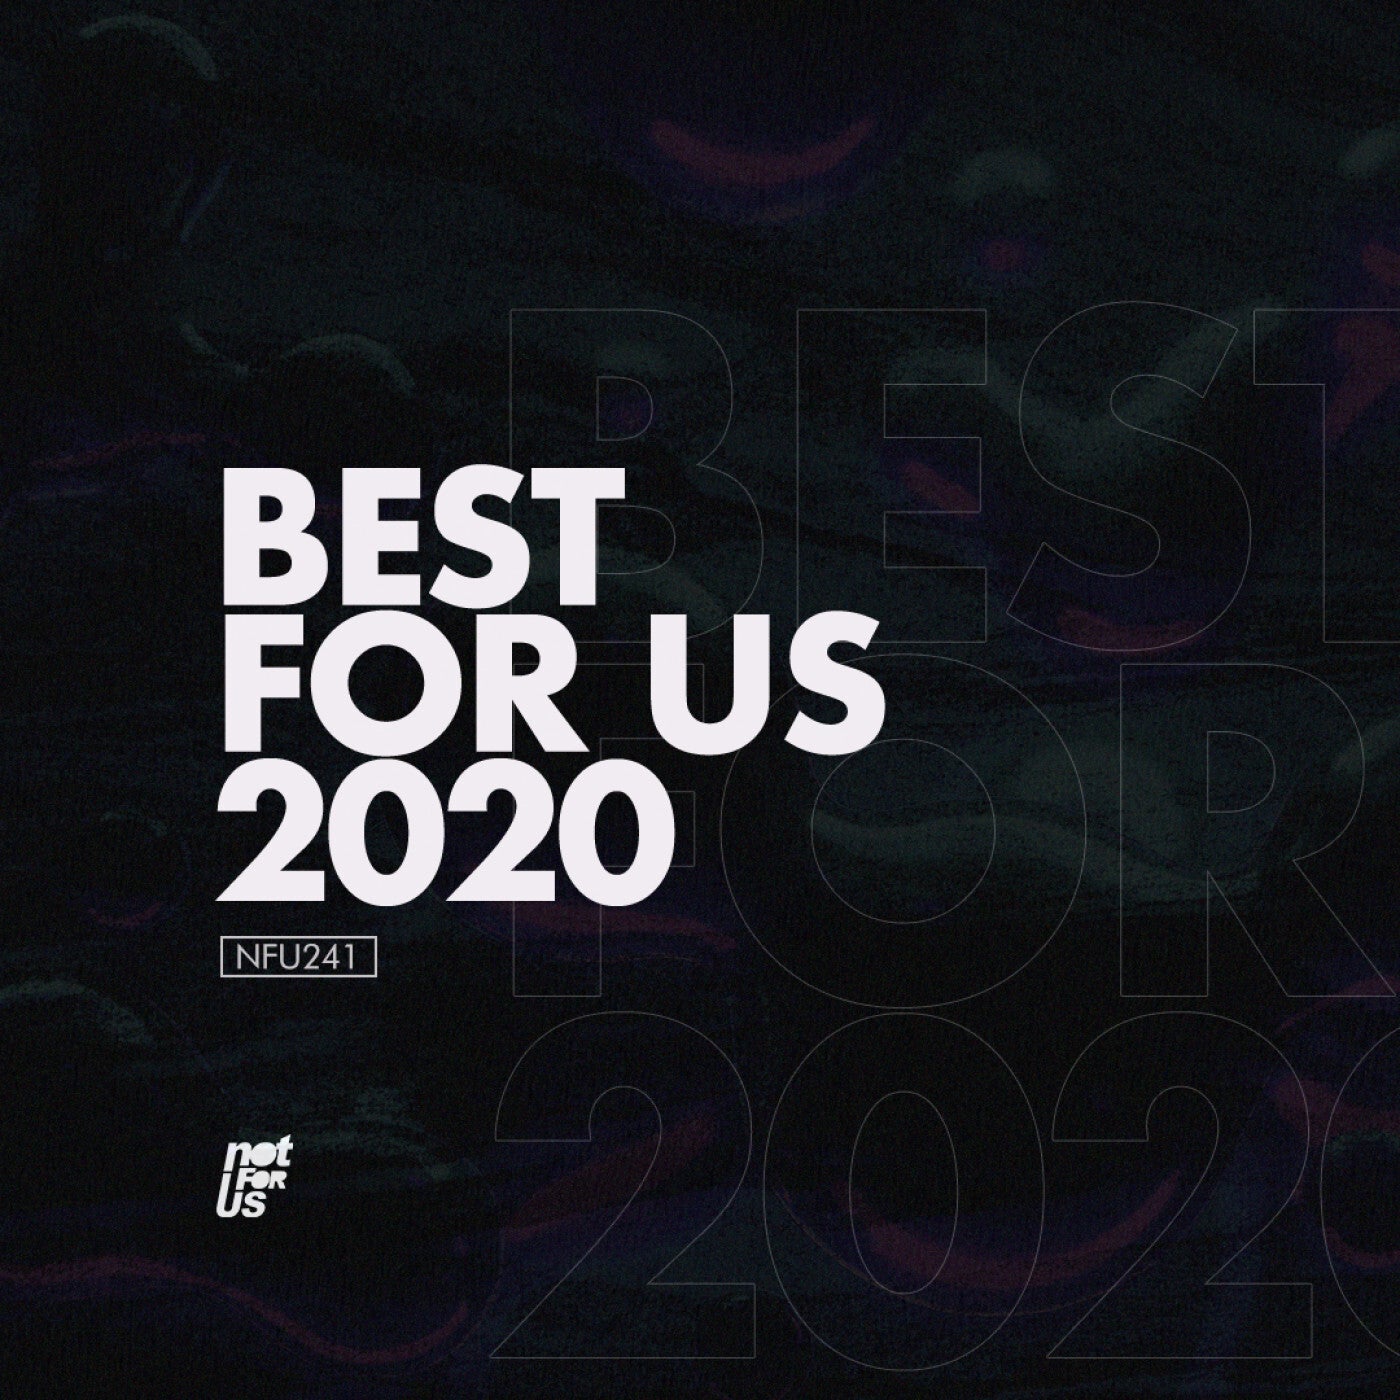 image cover: VA - Best For Us 2020 / NFU241